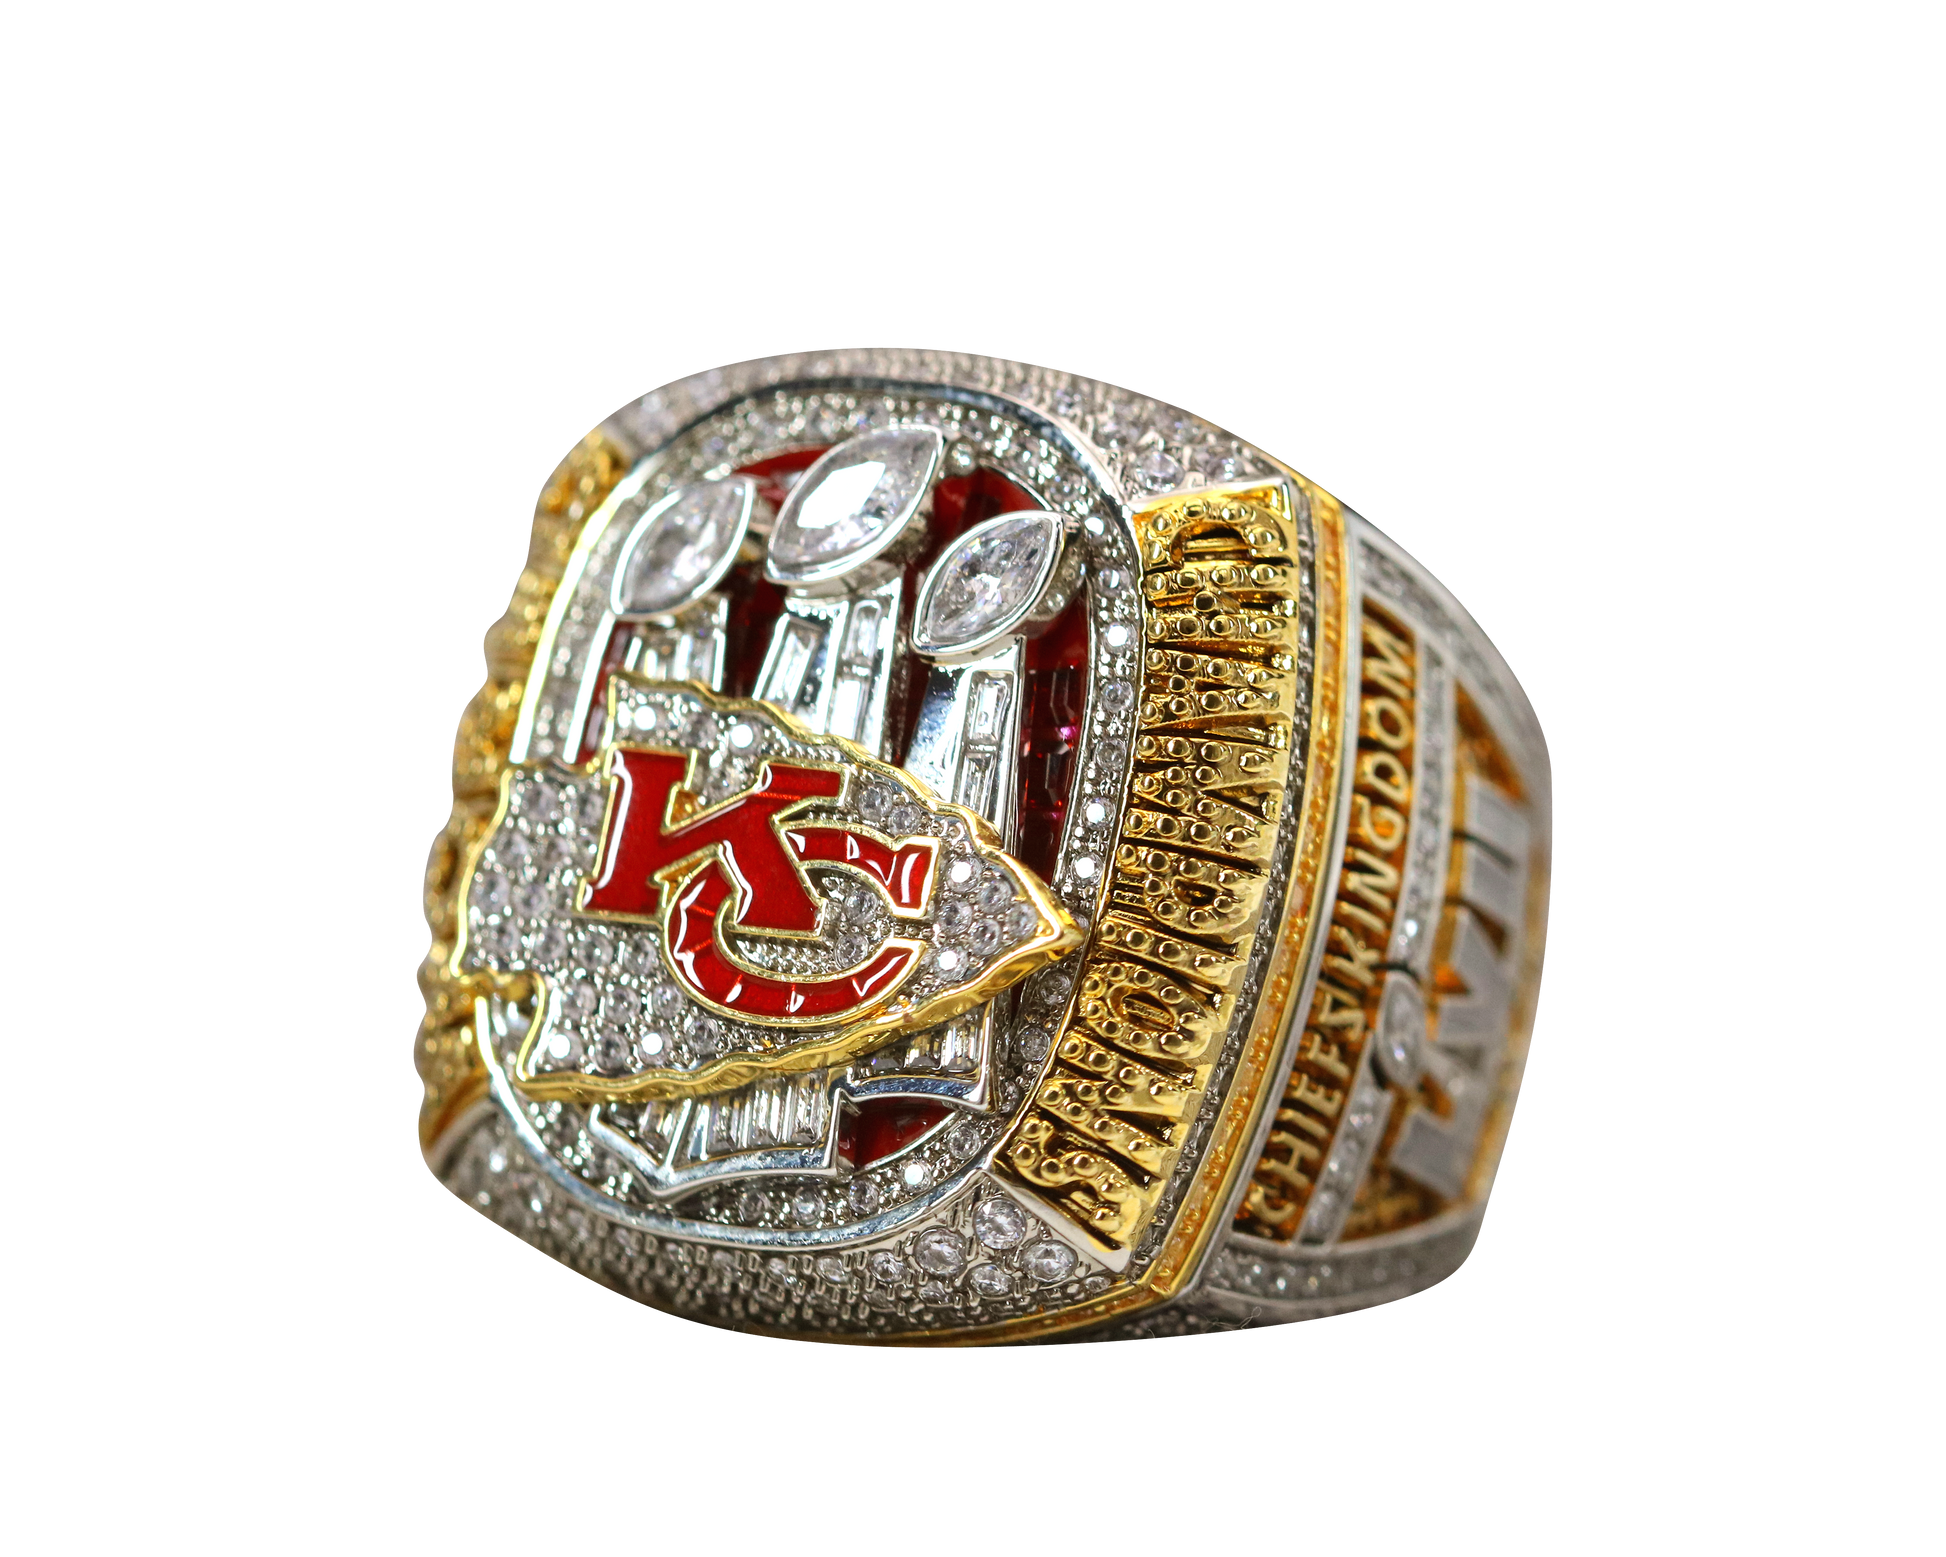 Kansas City Chiefs Super Bowl Lvii Champions Diamond Ring Png